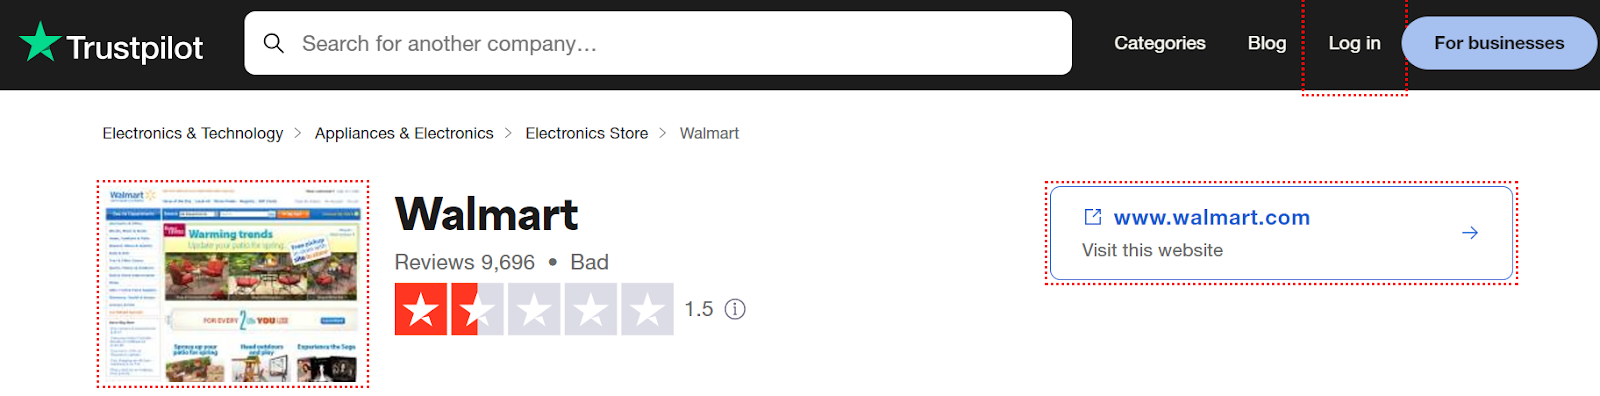 Walmart reviews according to Trustpilot